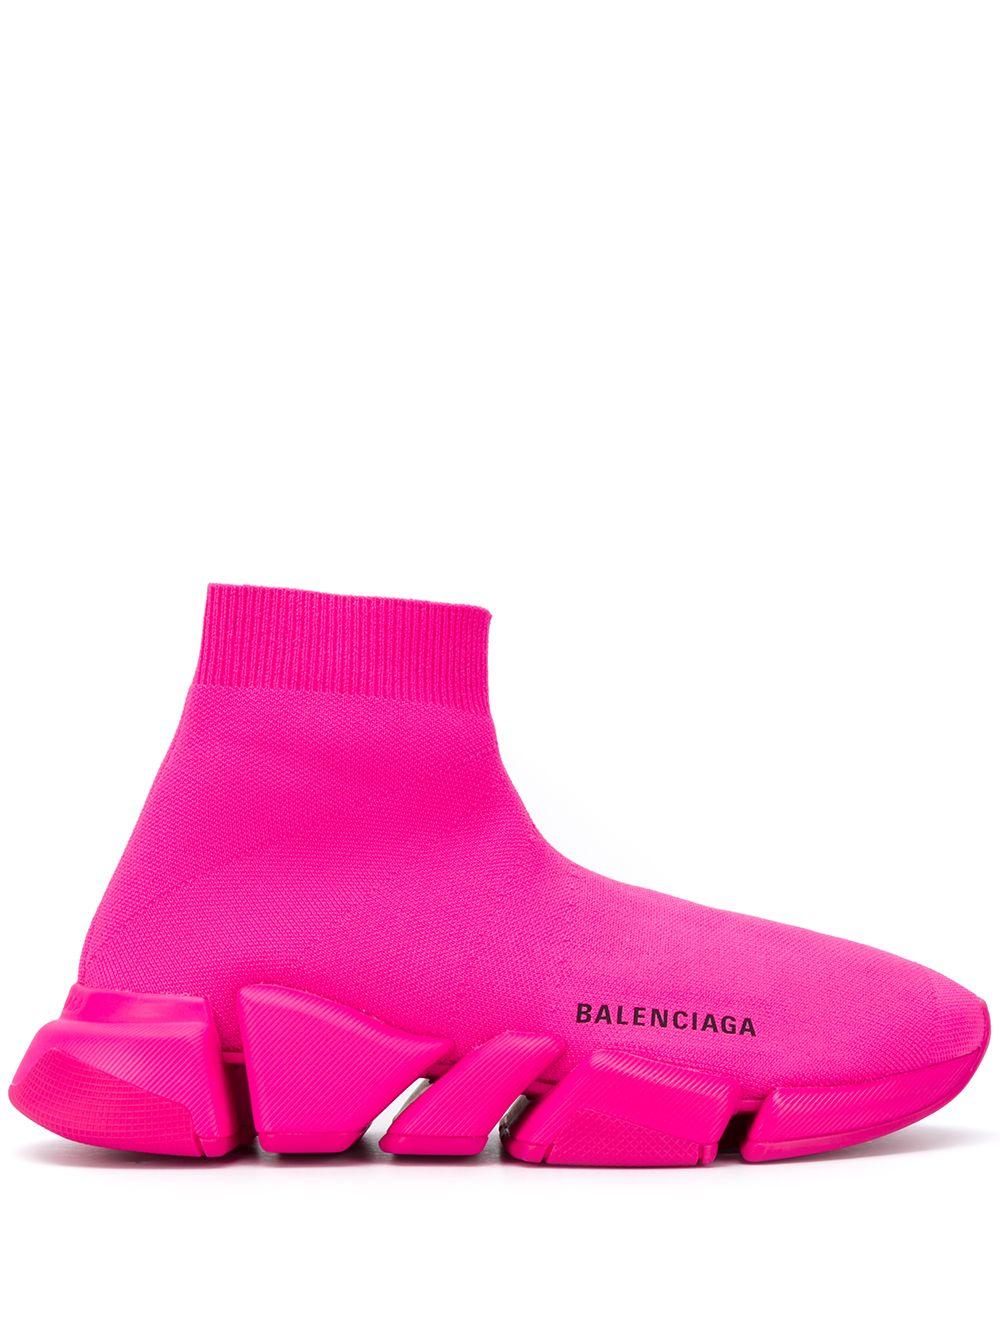 Balenciaga Slip-on Sock Trainers in Fuchsia (Pink) - Save 32% | Lyst